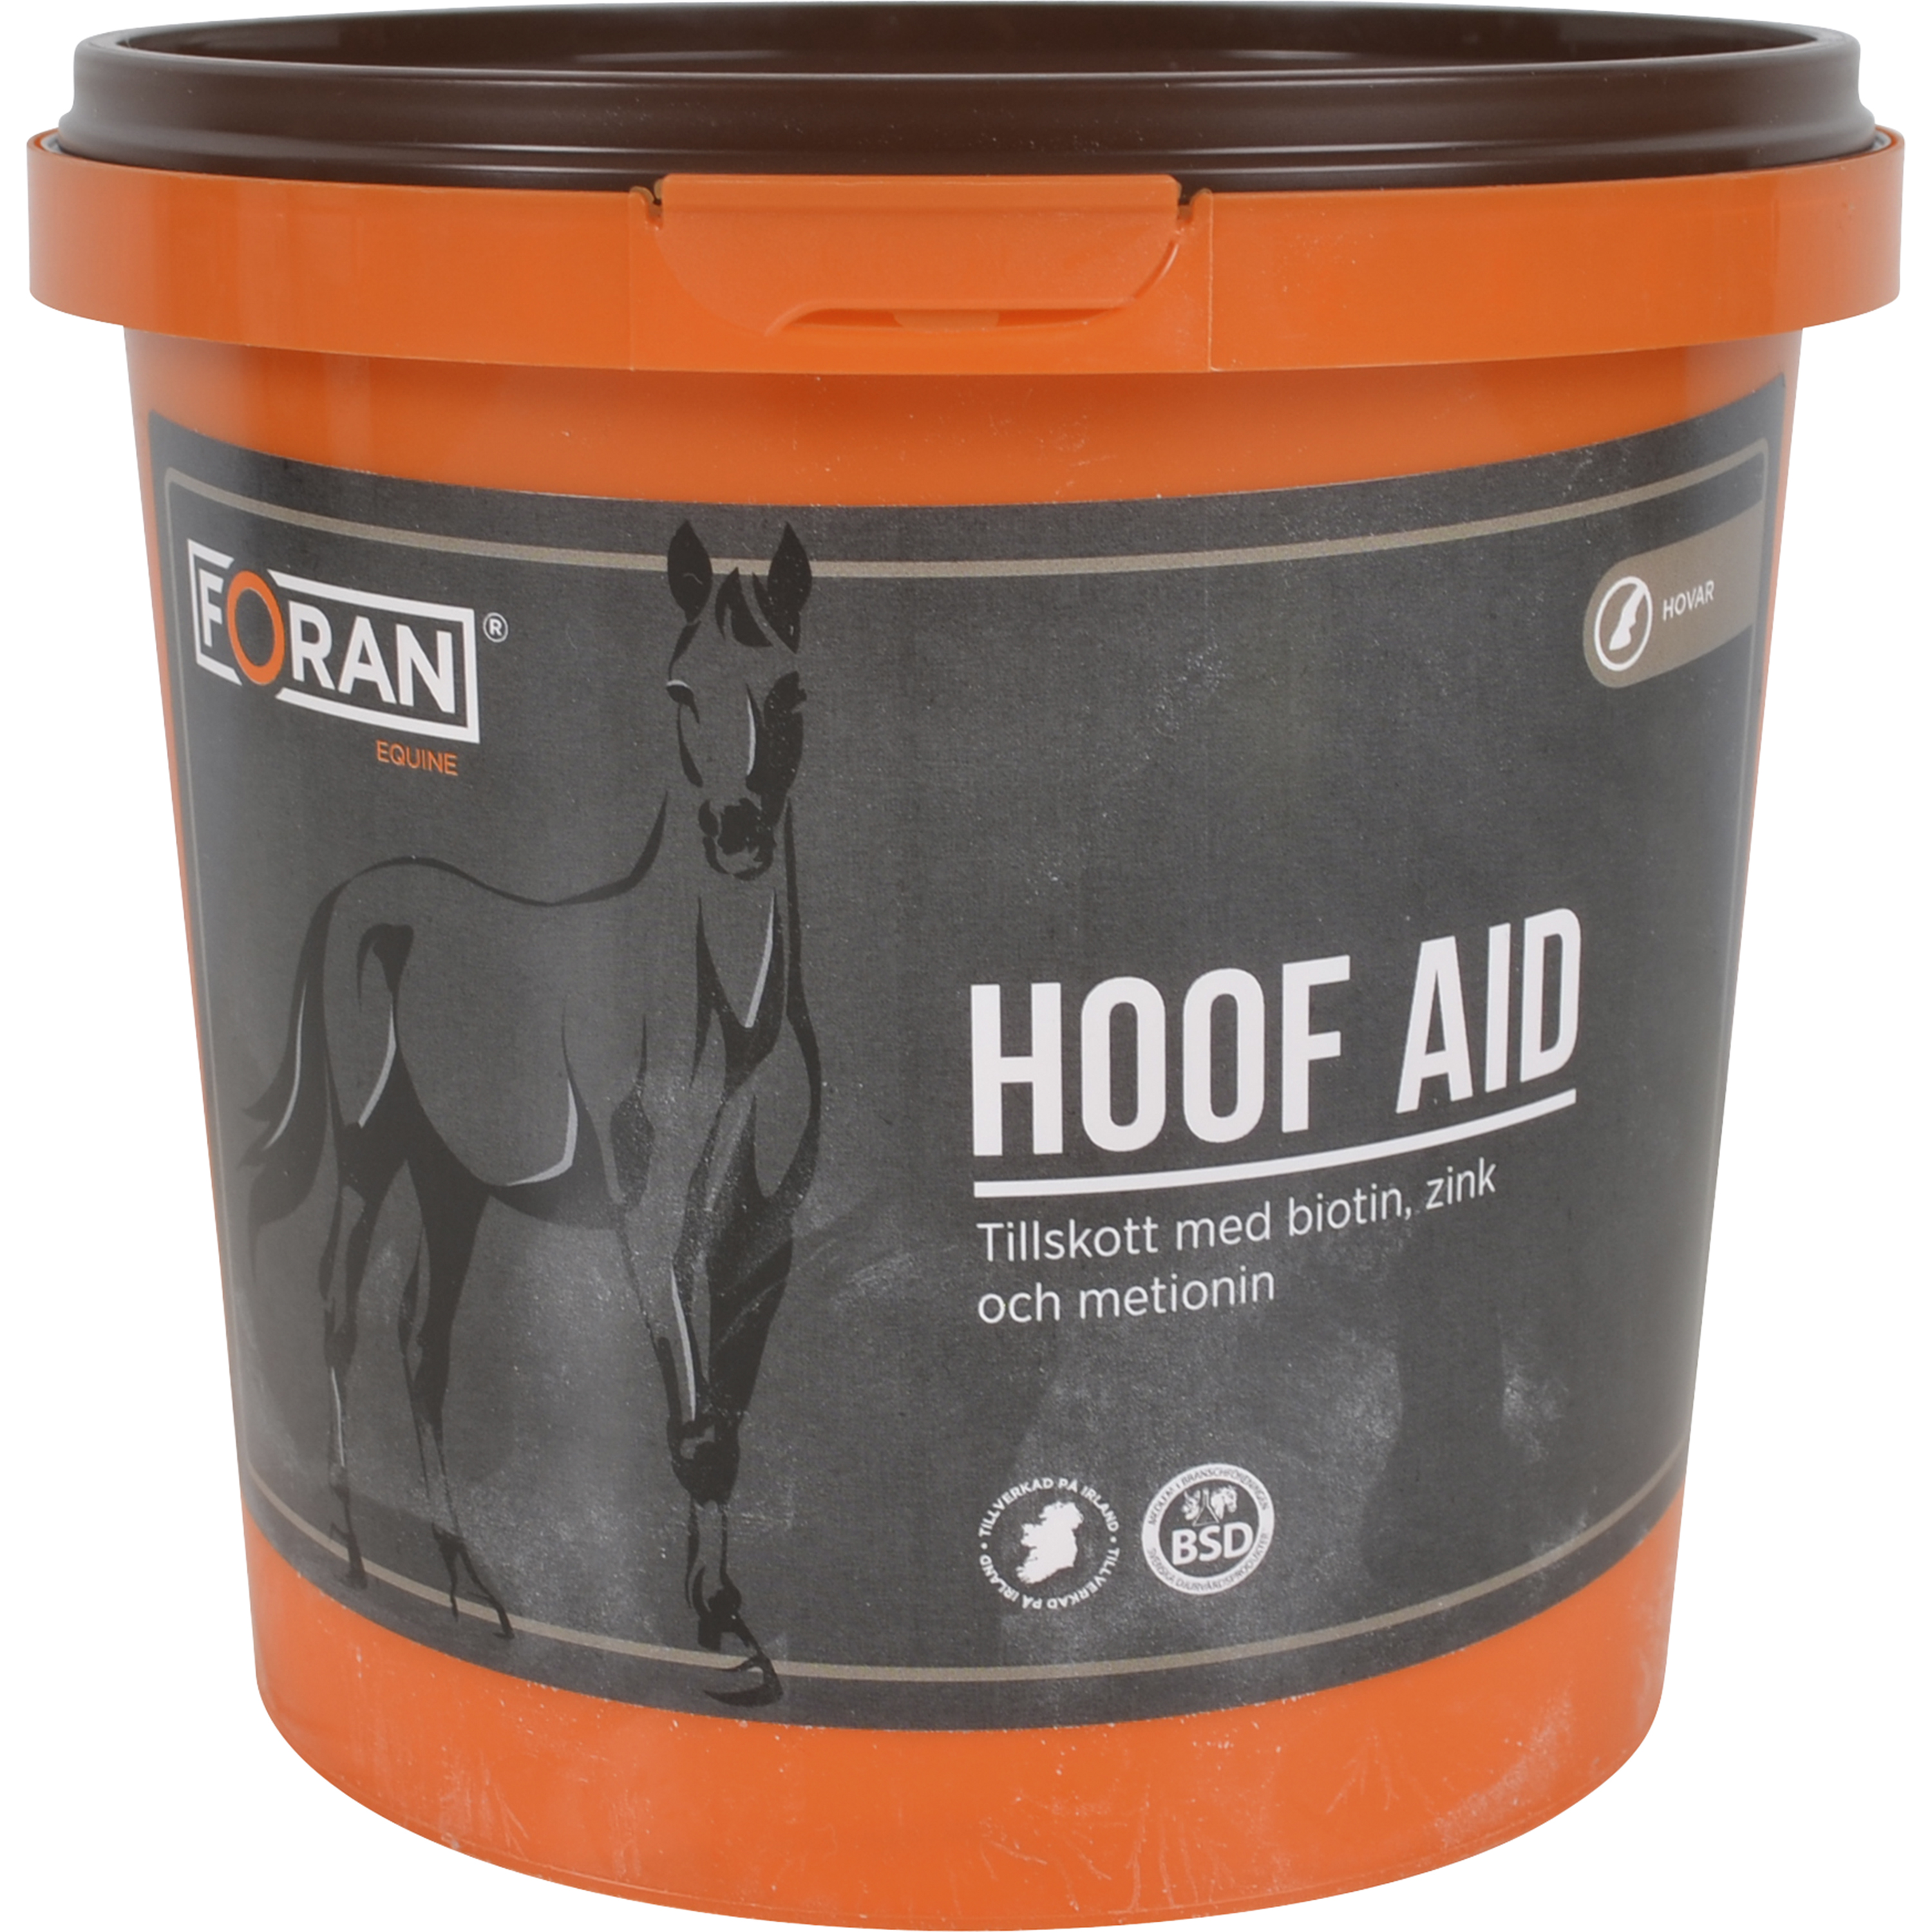 Hovvård Foran Equine Products Biotin Hoof Aid, 1 kg